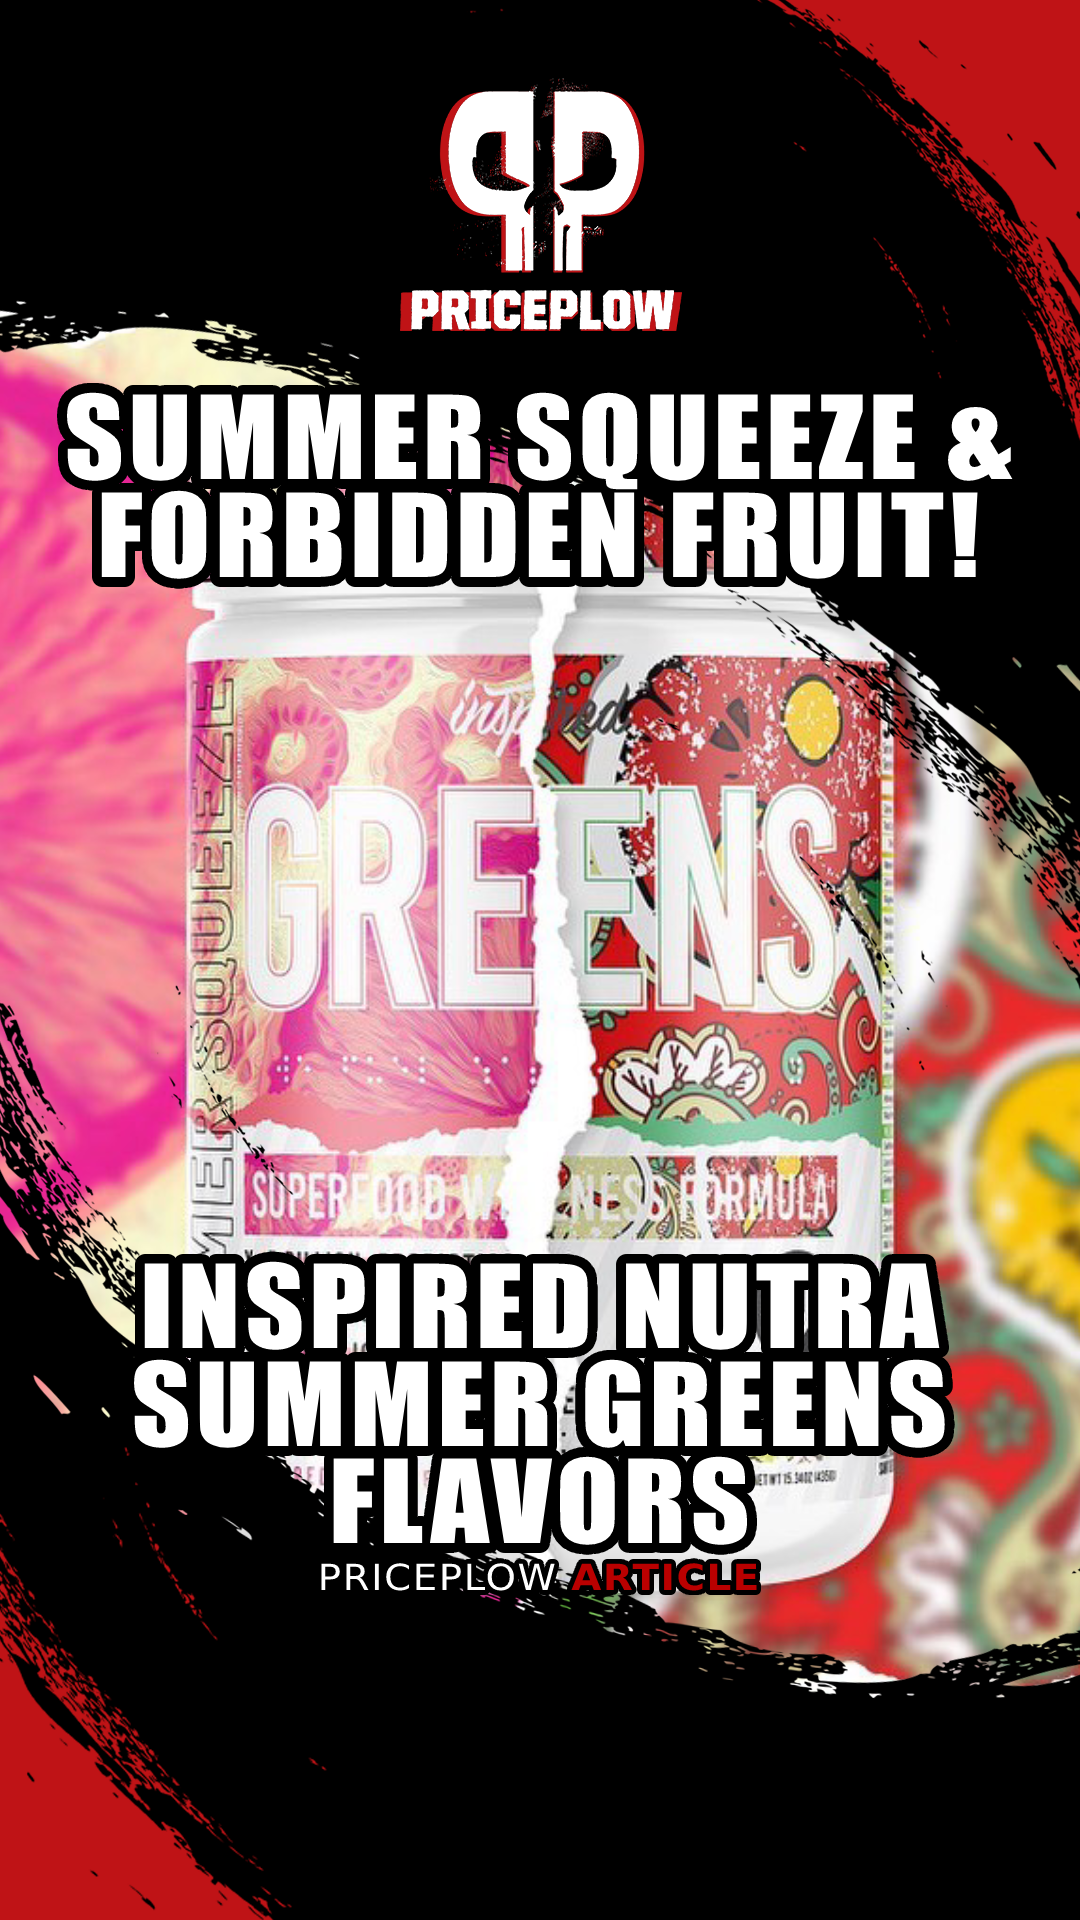 Inspired Nutraceuticals Greens: Forbidden Fruit & Summer Squeeze